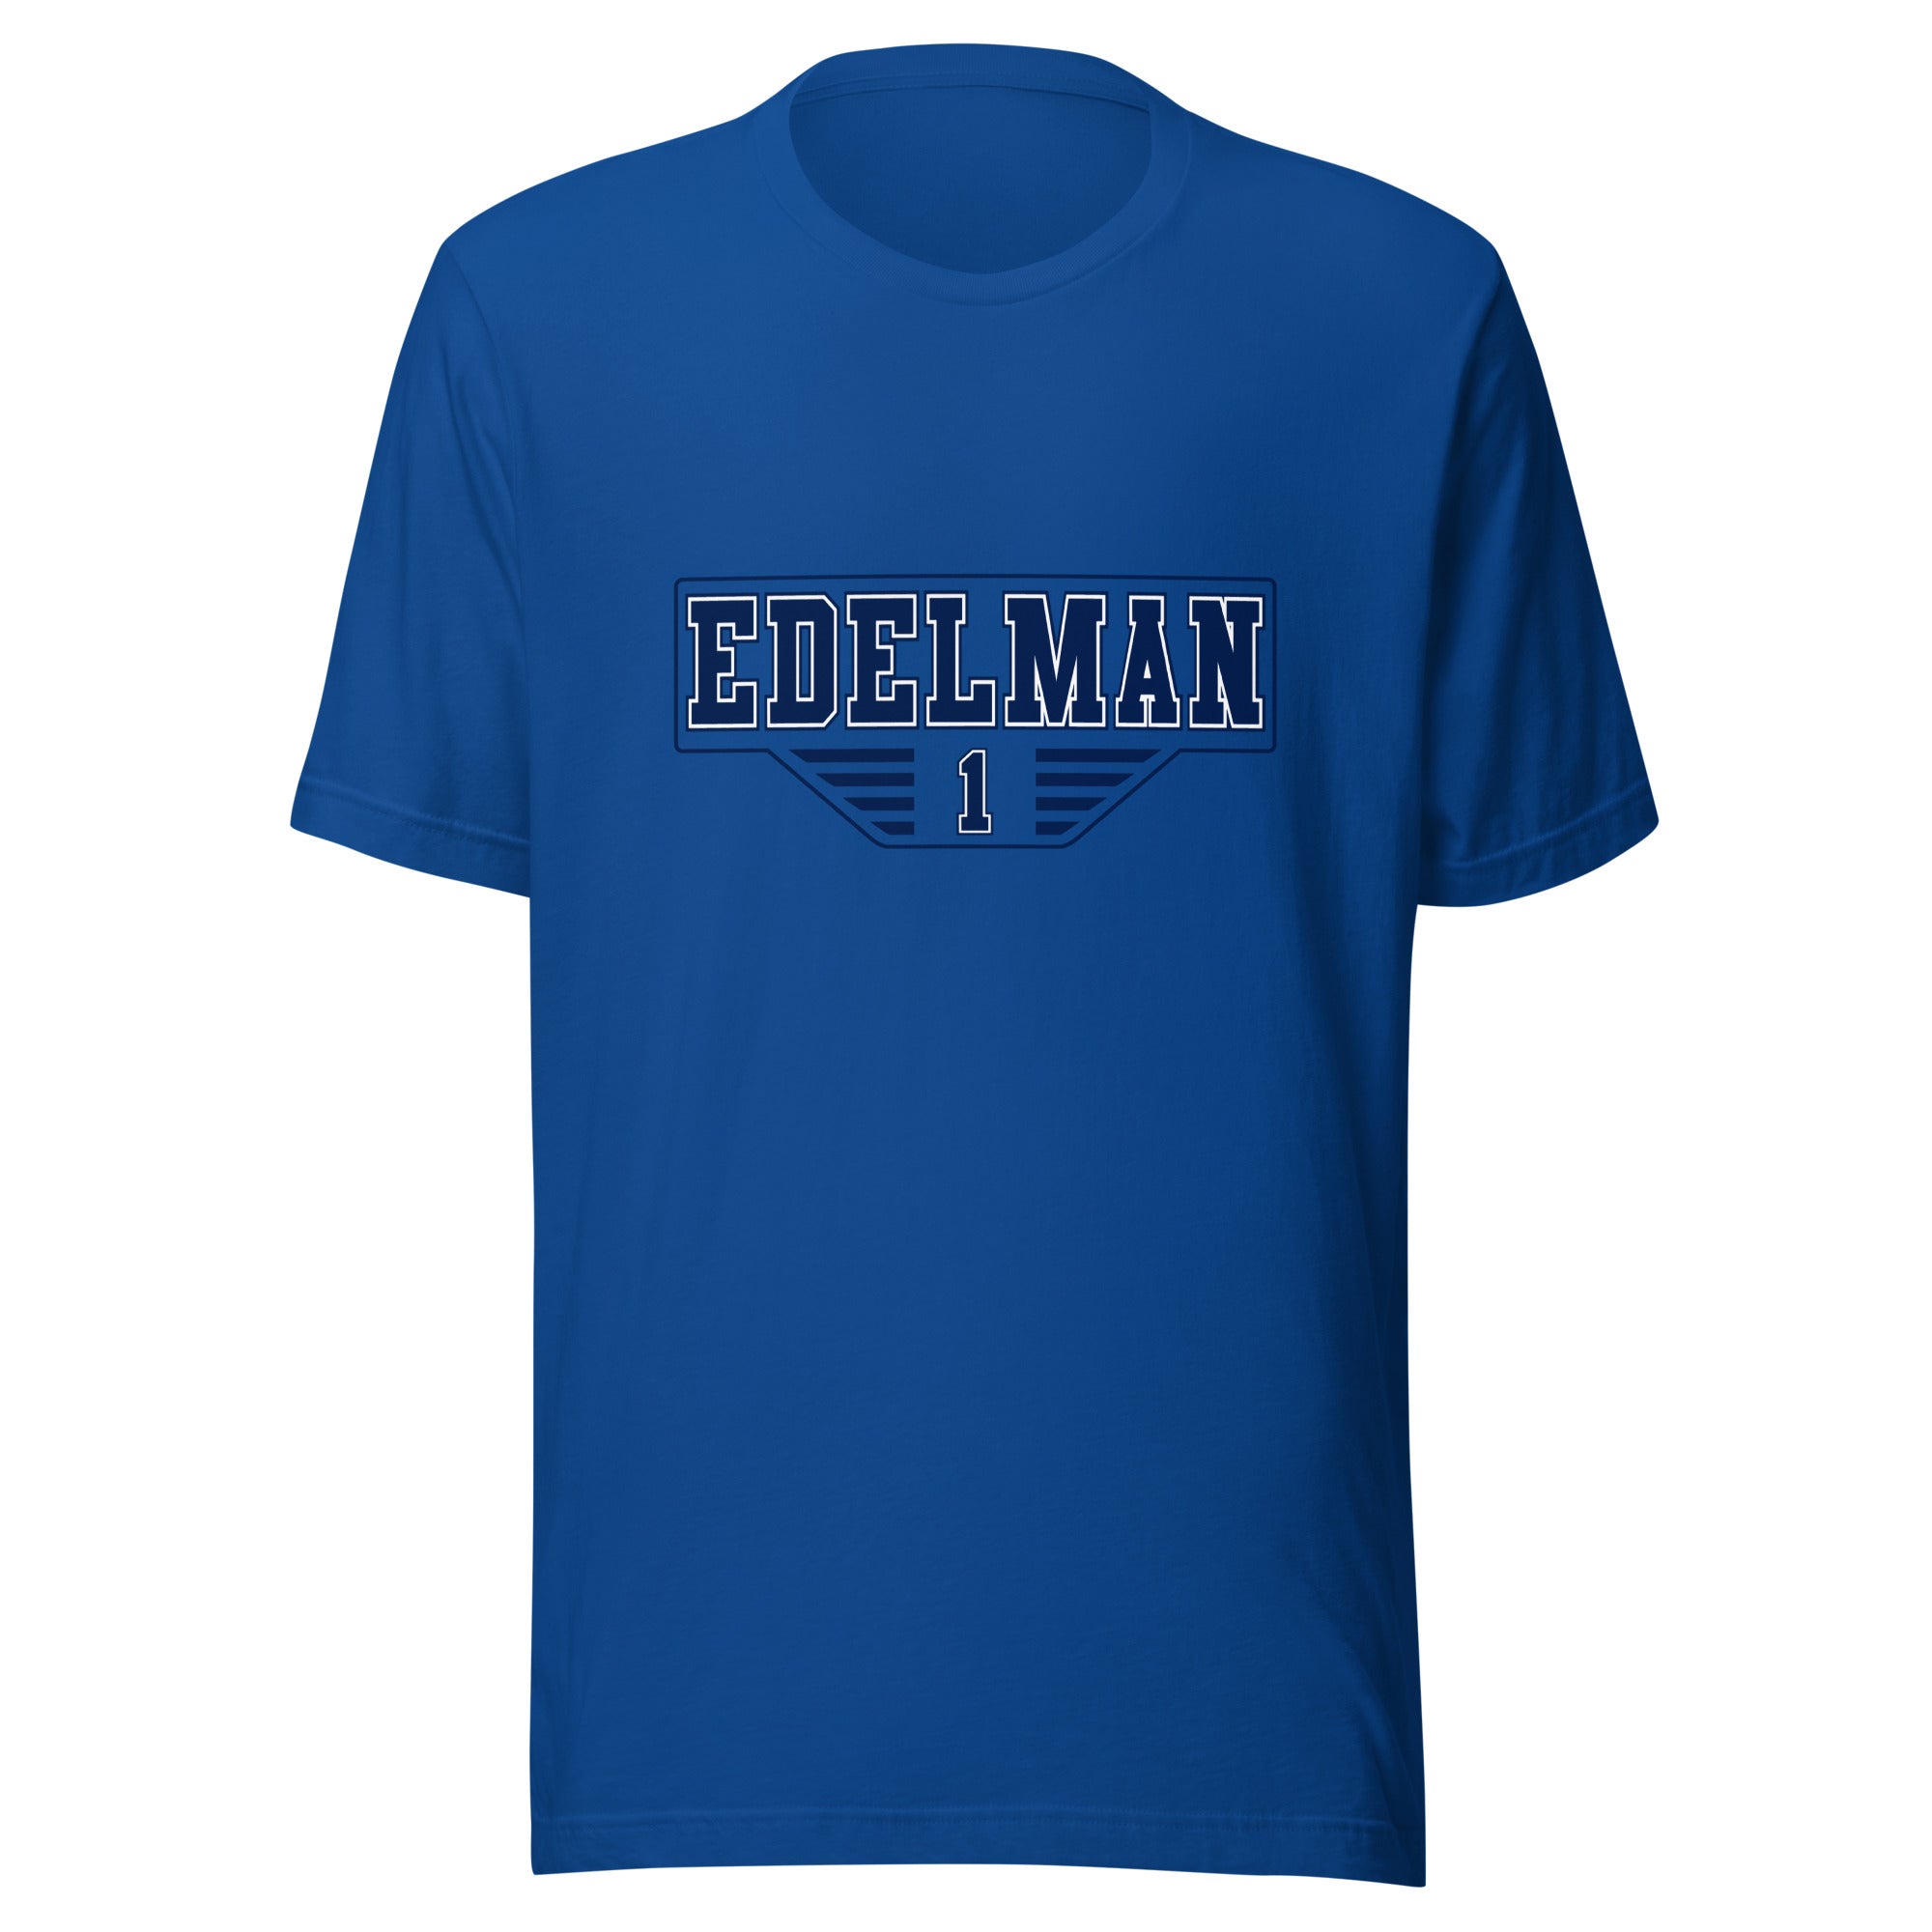 Edelman #1 - Unisex t-shirt